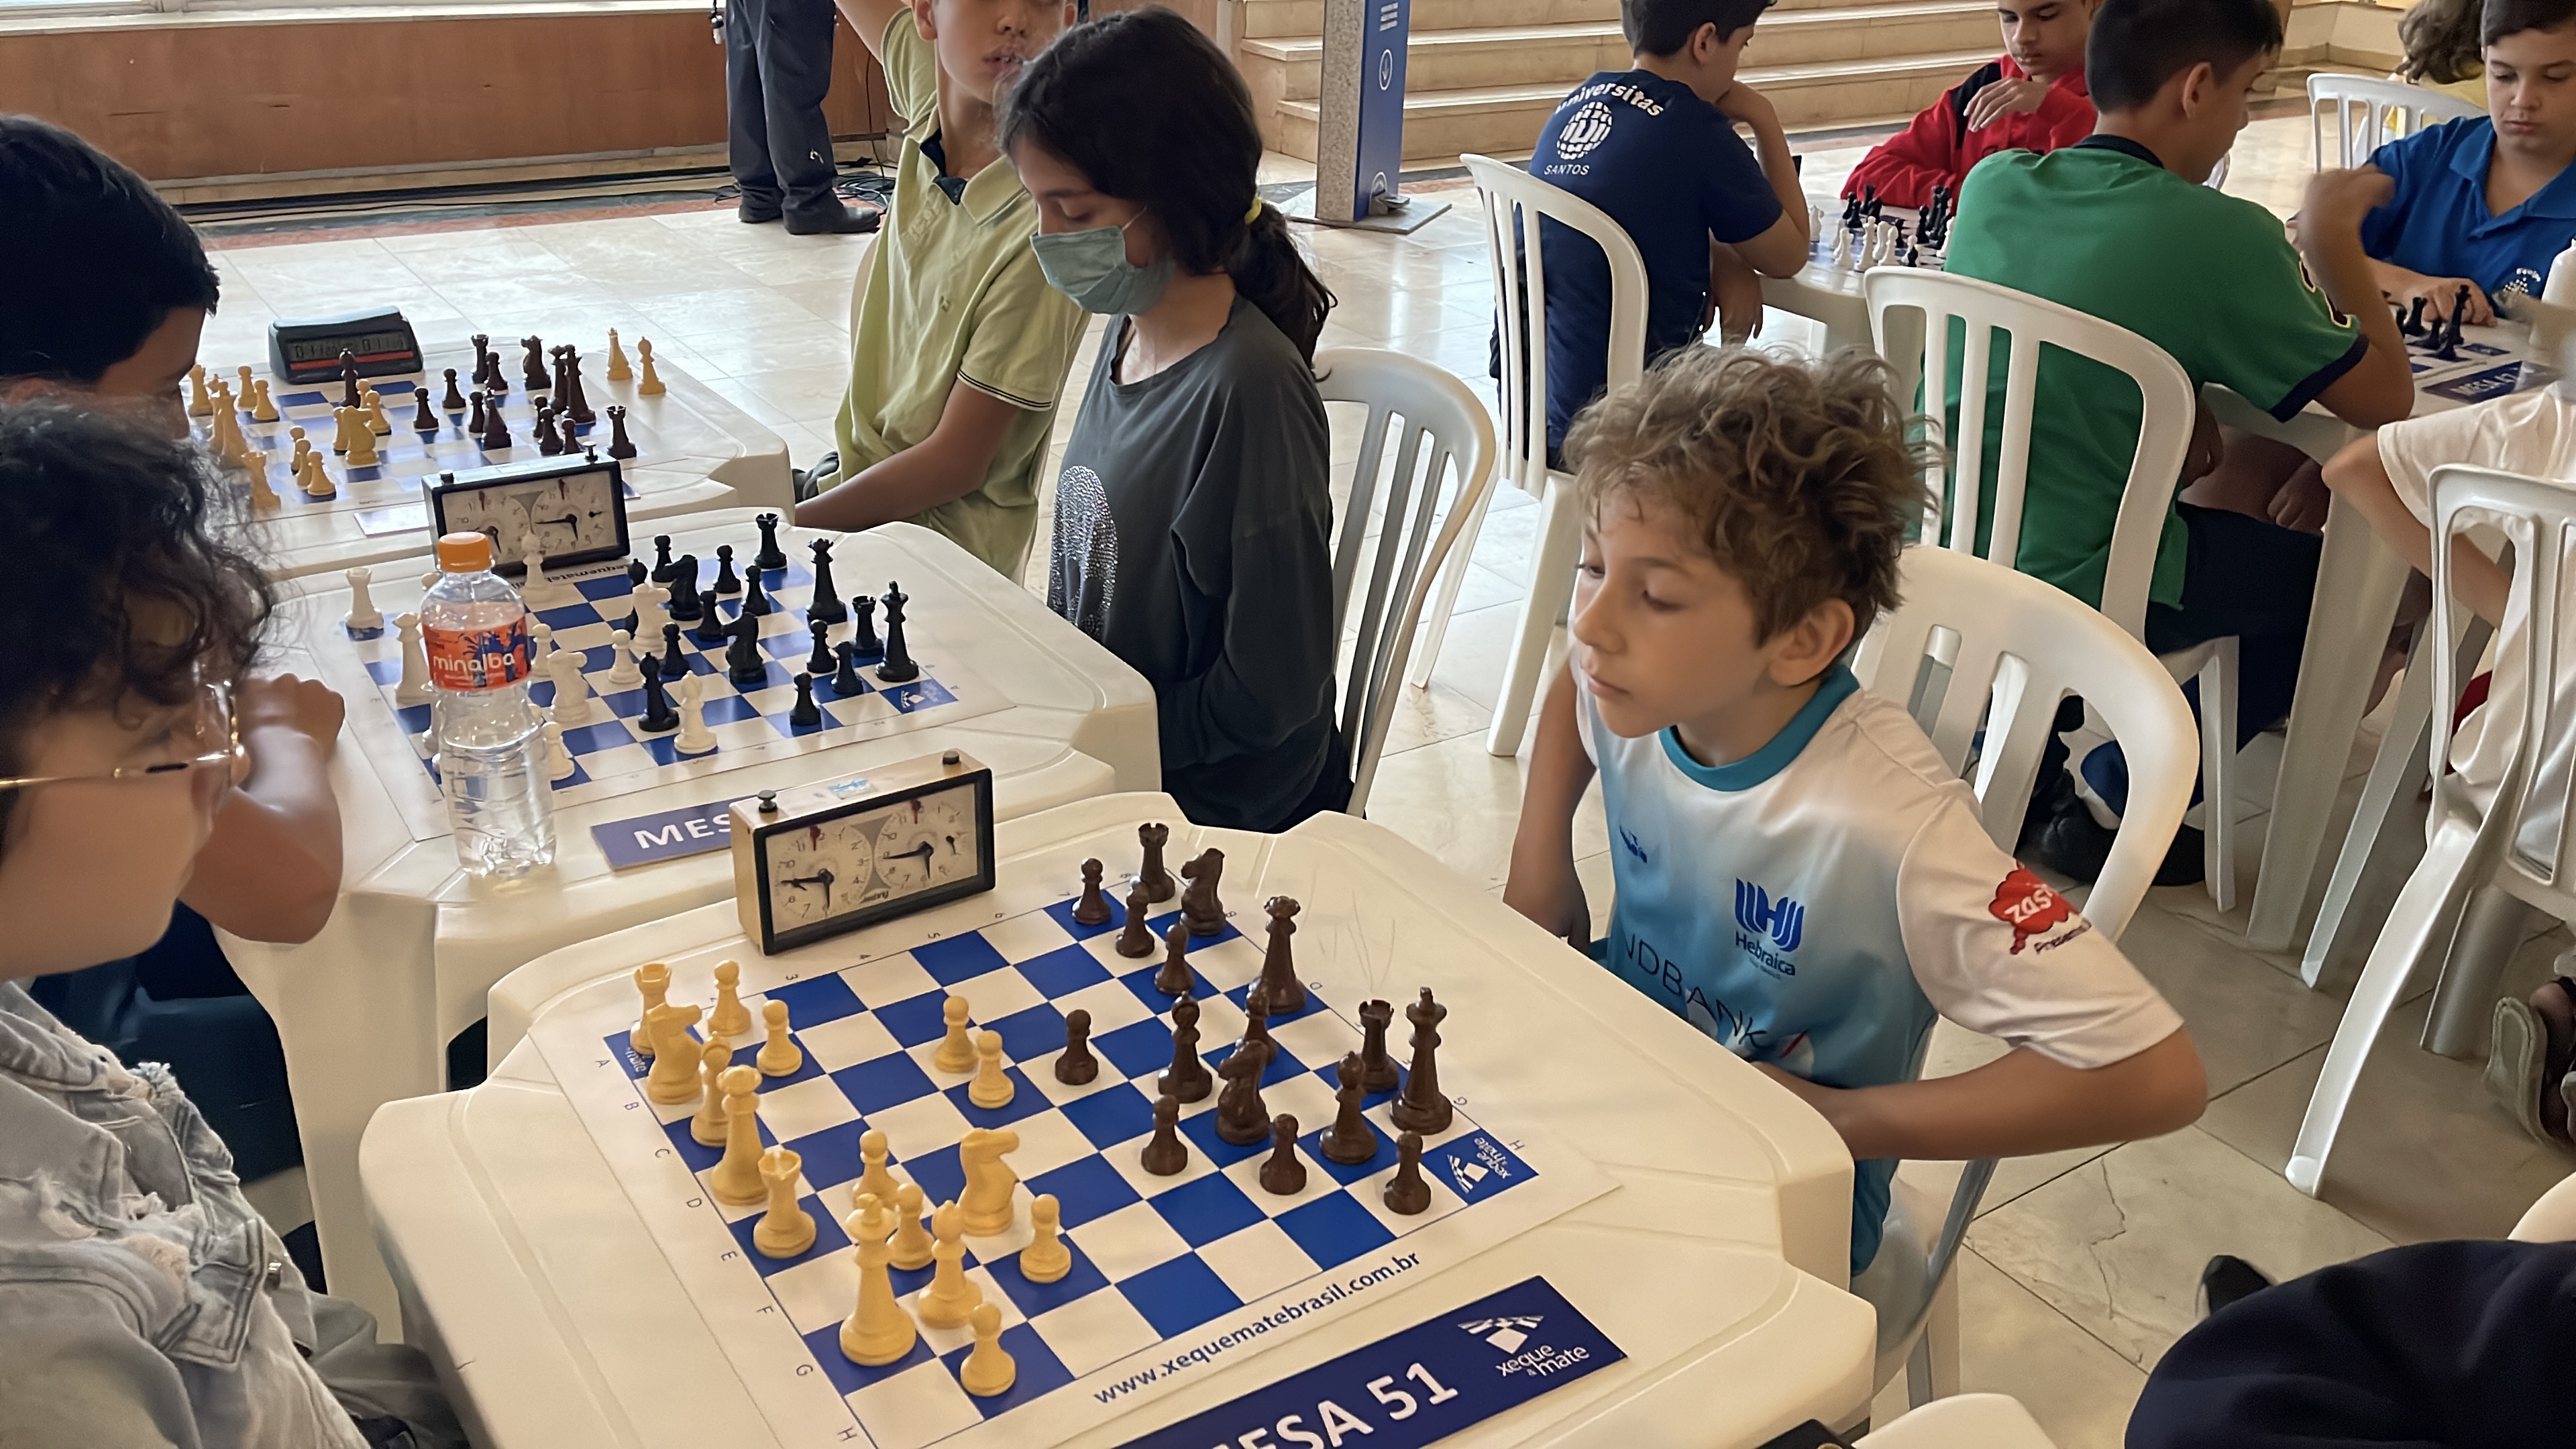 Xeque-Mate: Torneio Aberto de xadrez no mês de junho - AABB Porto Alegre